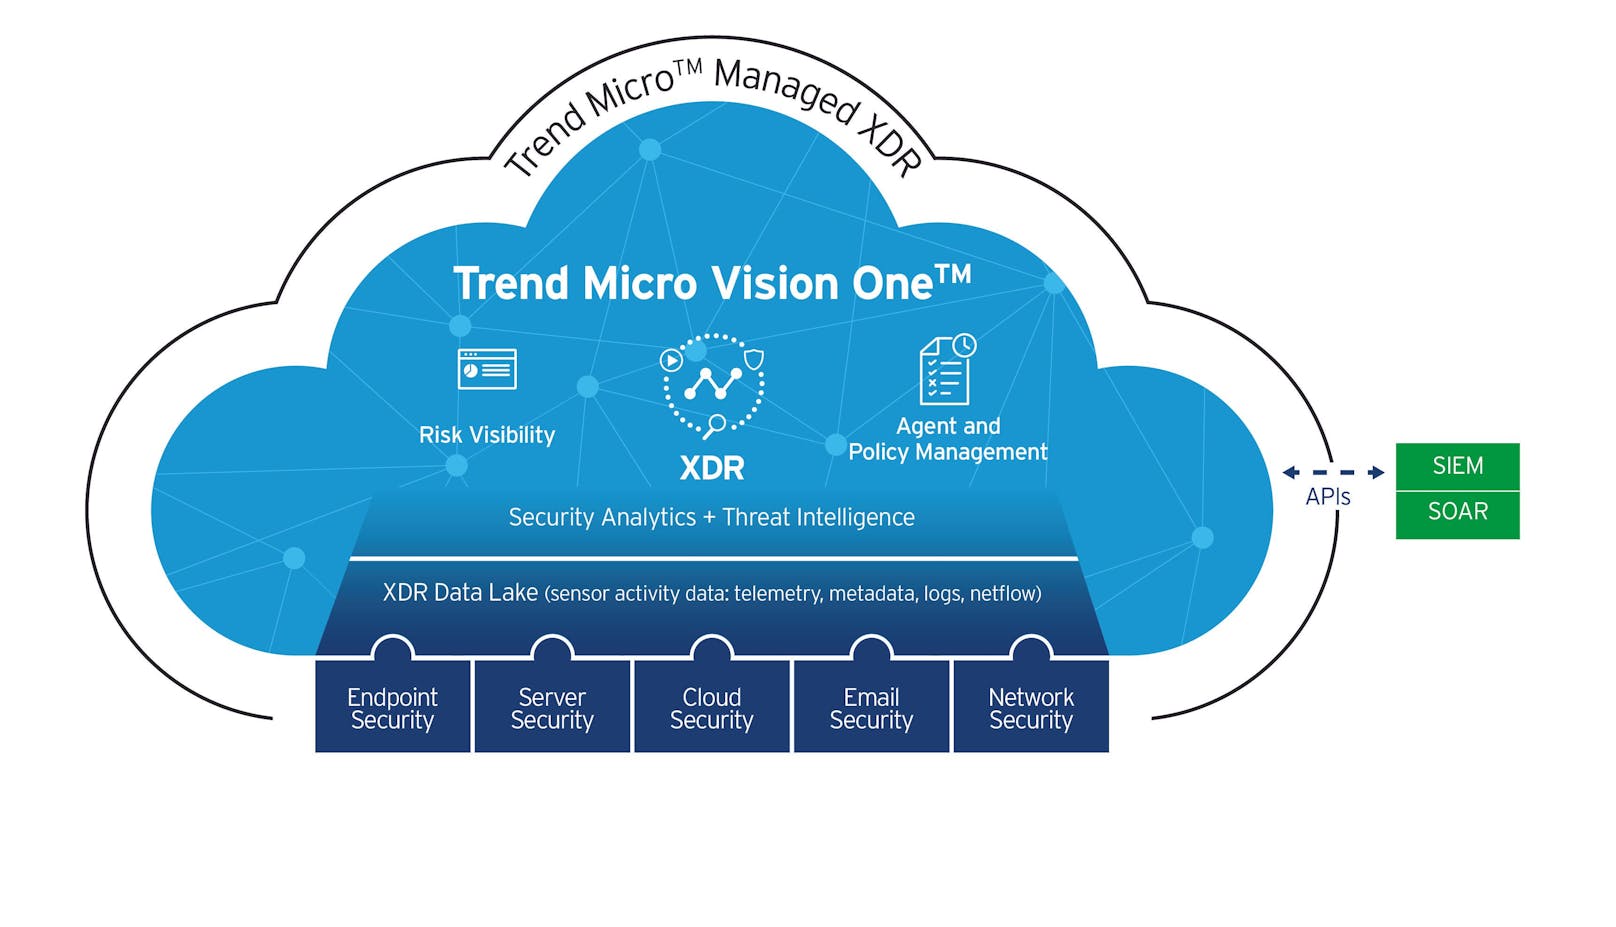 Vision-One-Plattform von Trend Micro entlastet Security-Operations-Teams (SOCs).